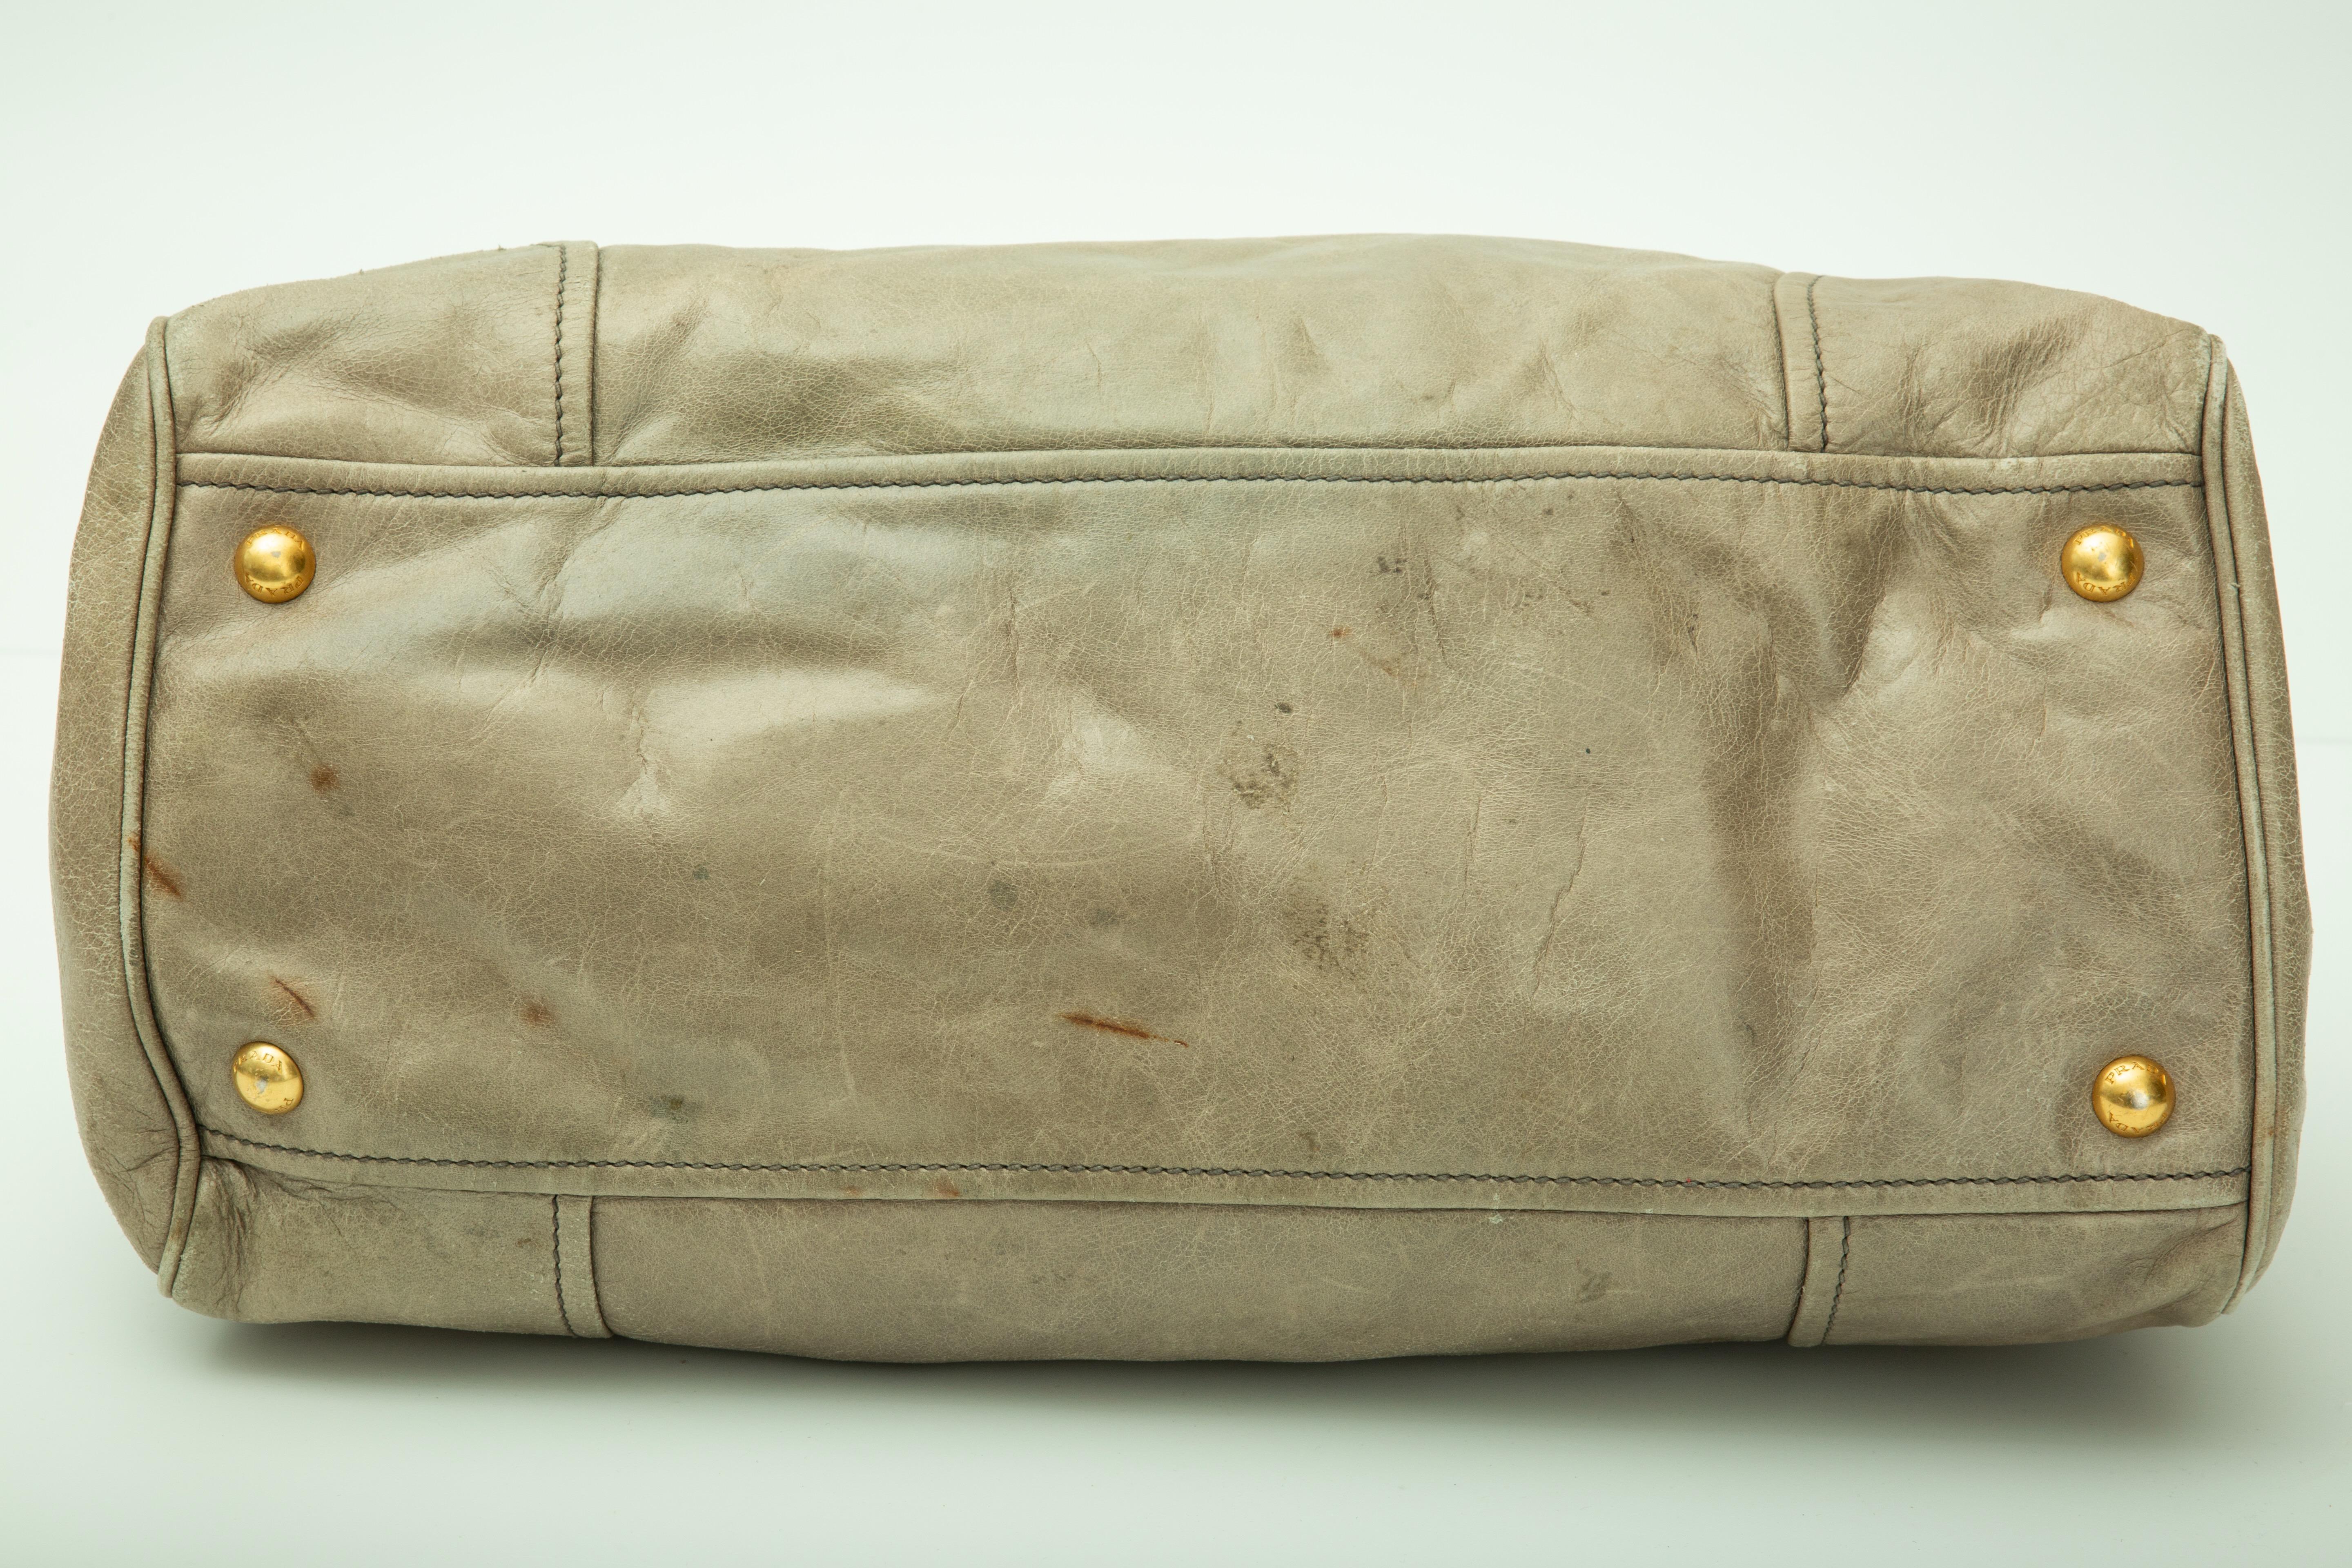 Prada Vitello Daino Grey Calf Leather Satchel Bag (Bn2325) In Fair Condition For Sale In Montreal, Quebec